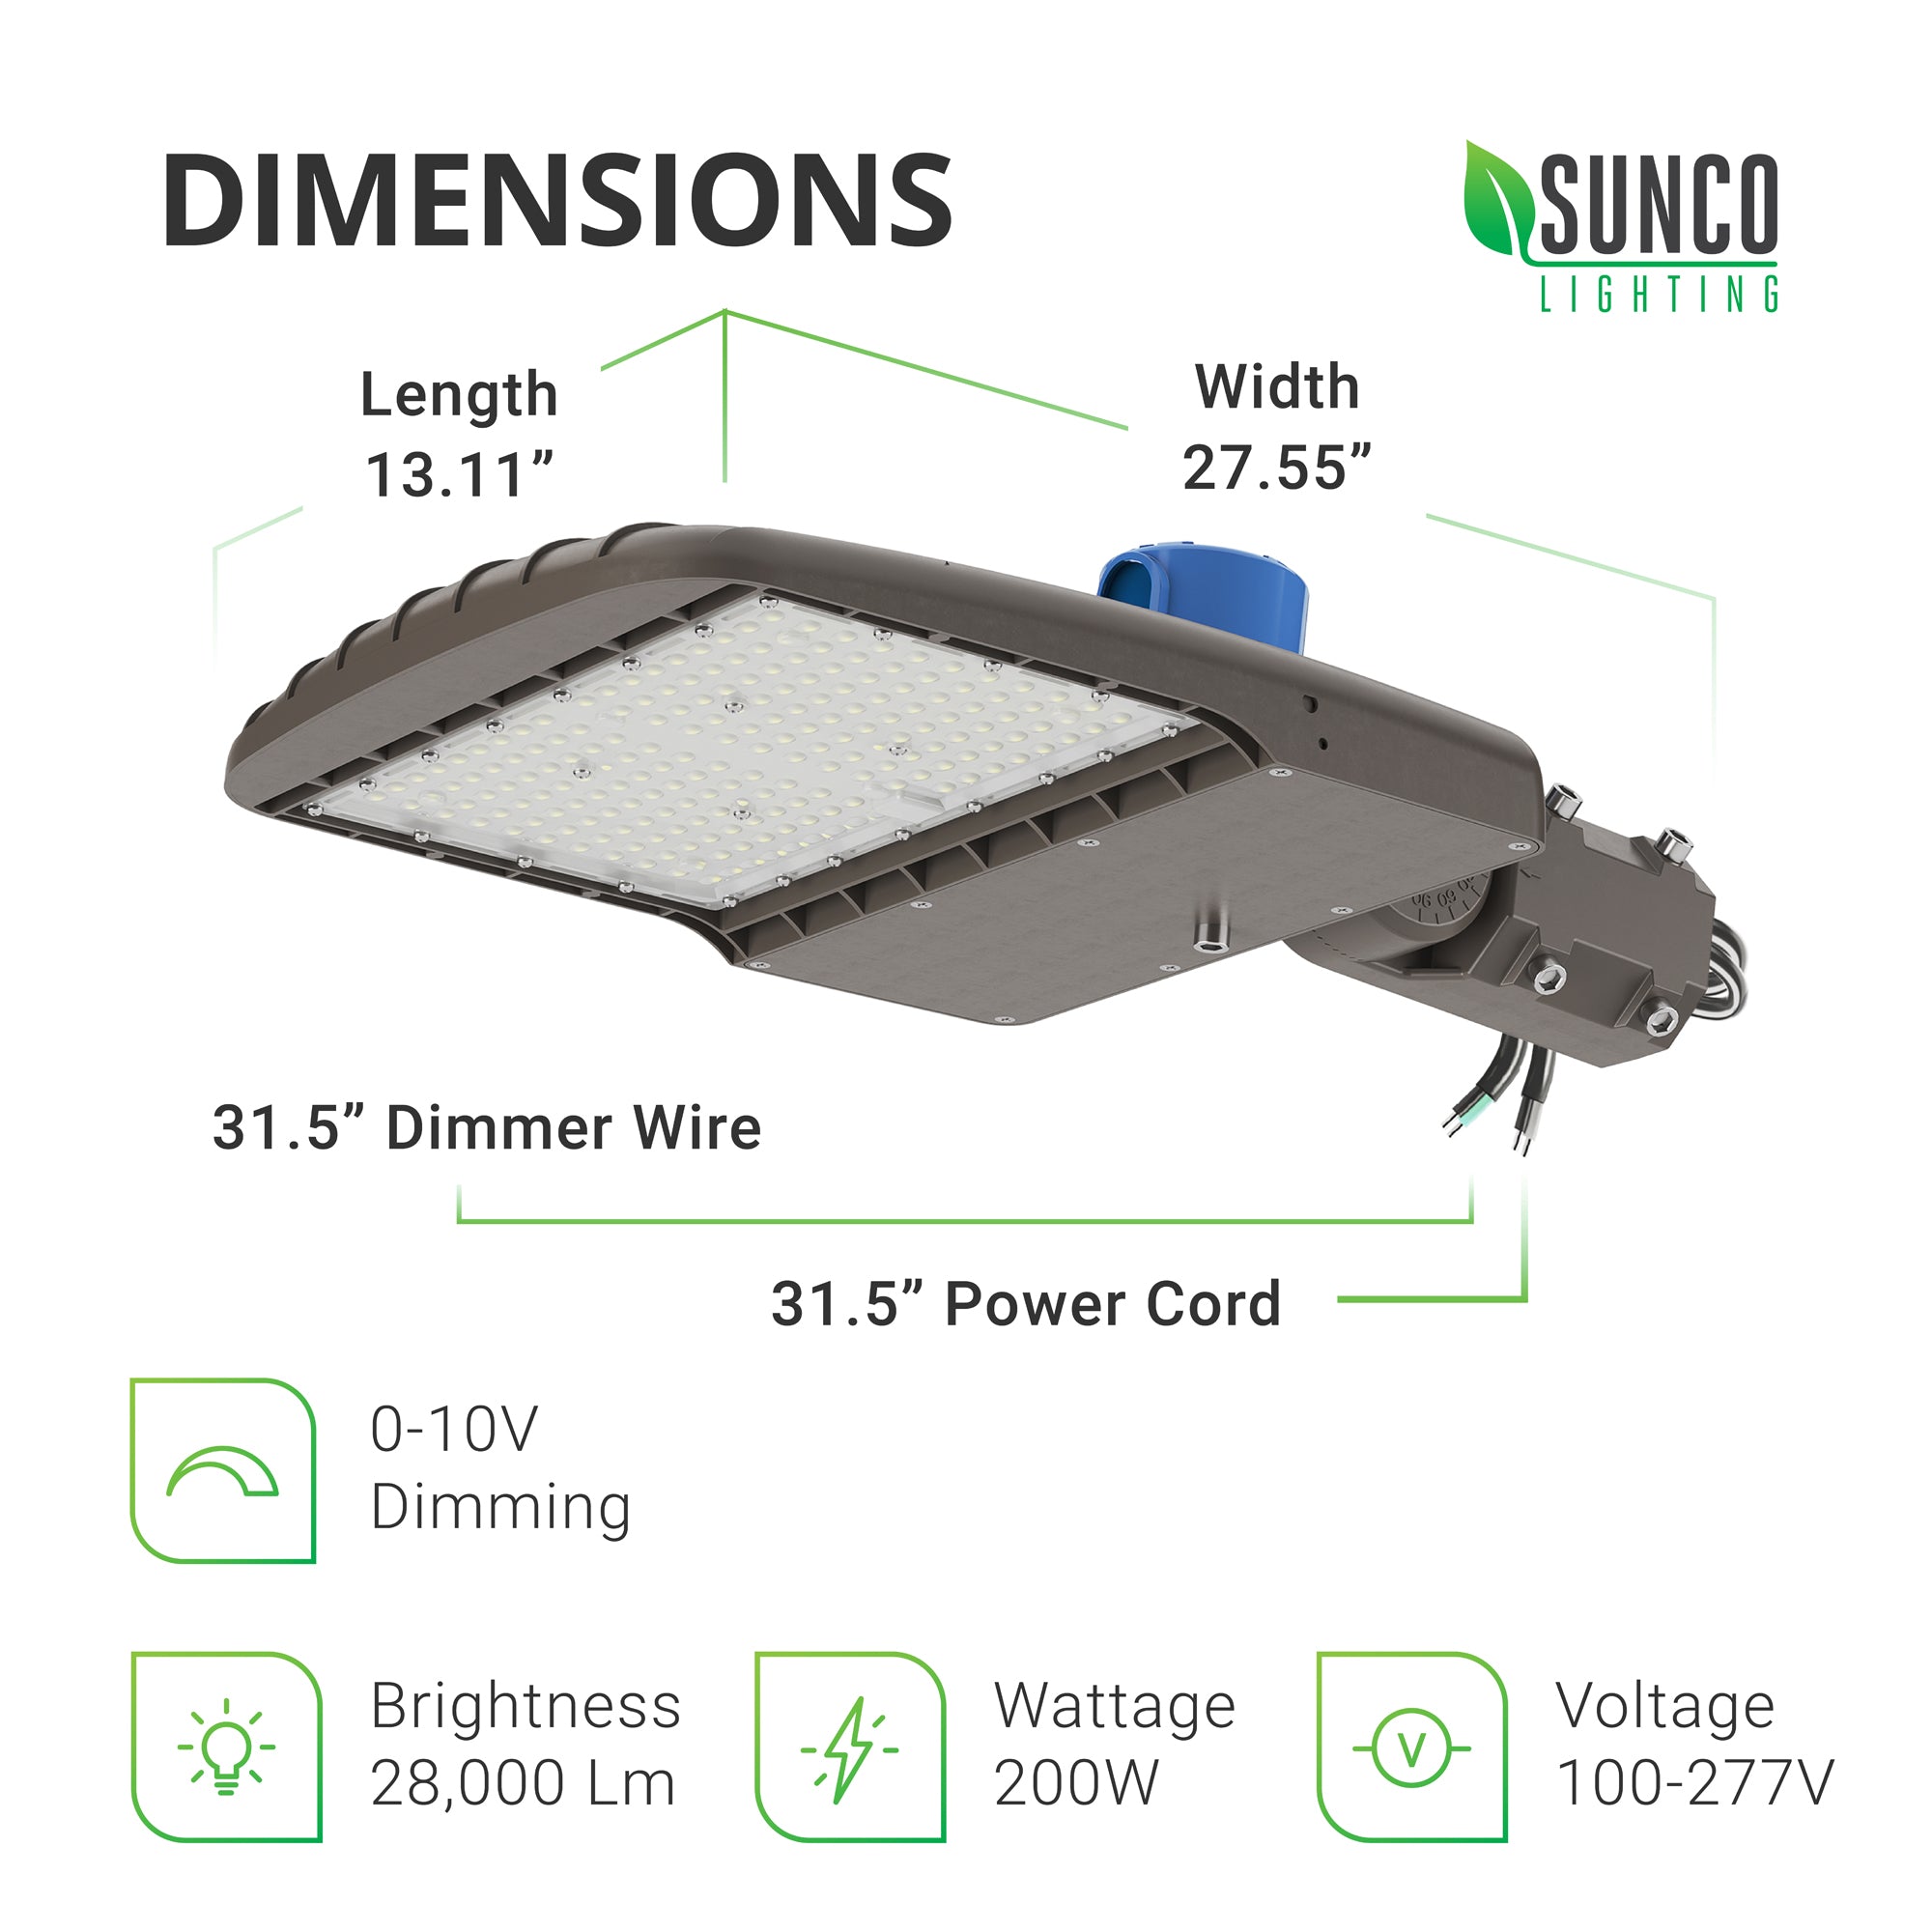 Shoebox LED 200W Parking Light Fixture LED LIGHTING SUNCO – Sunco  Lighting